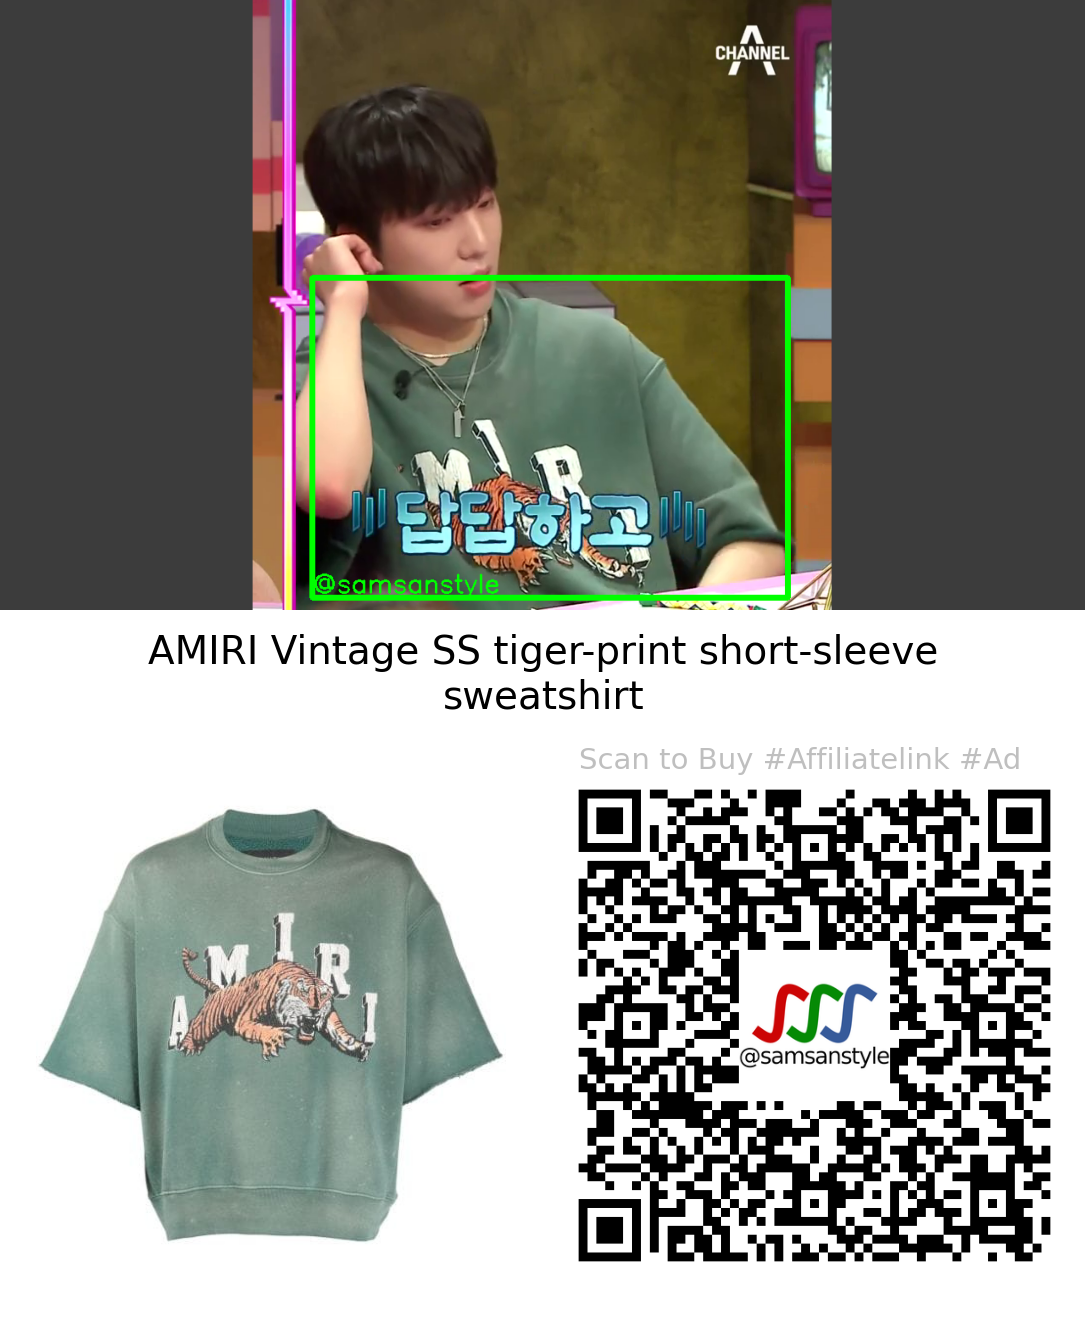 WINNER Yoon | Heart Signal S04E05 | AMIRI Vintage SS tiger-print short-sleeve sweatshirt